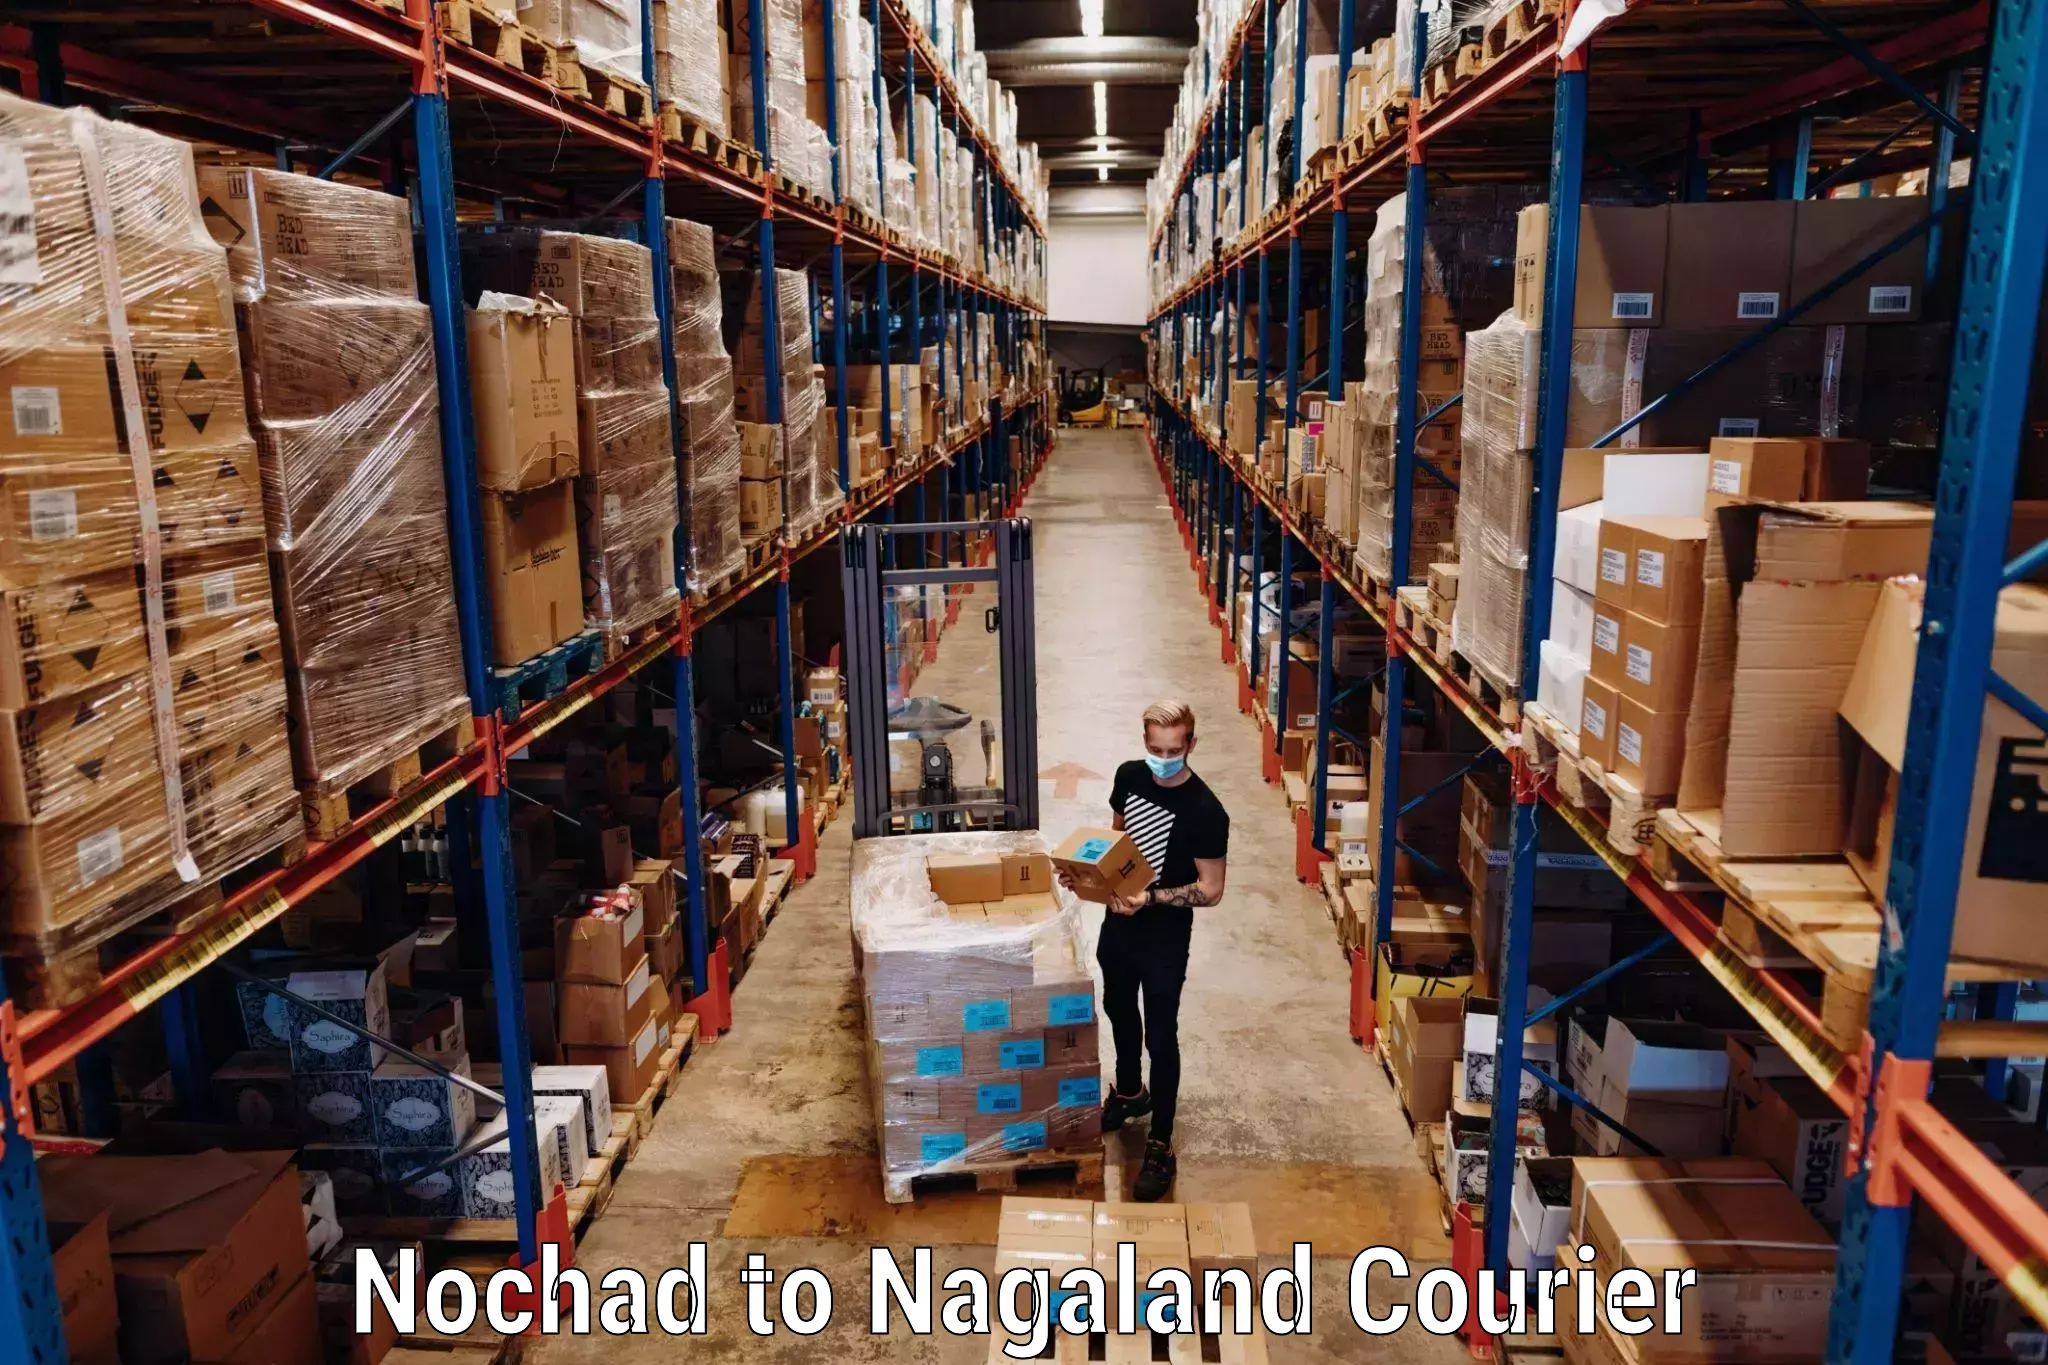 Luggage transport company Nochad to Nagaland